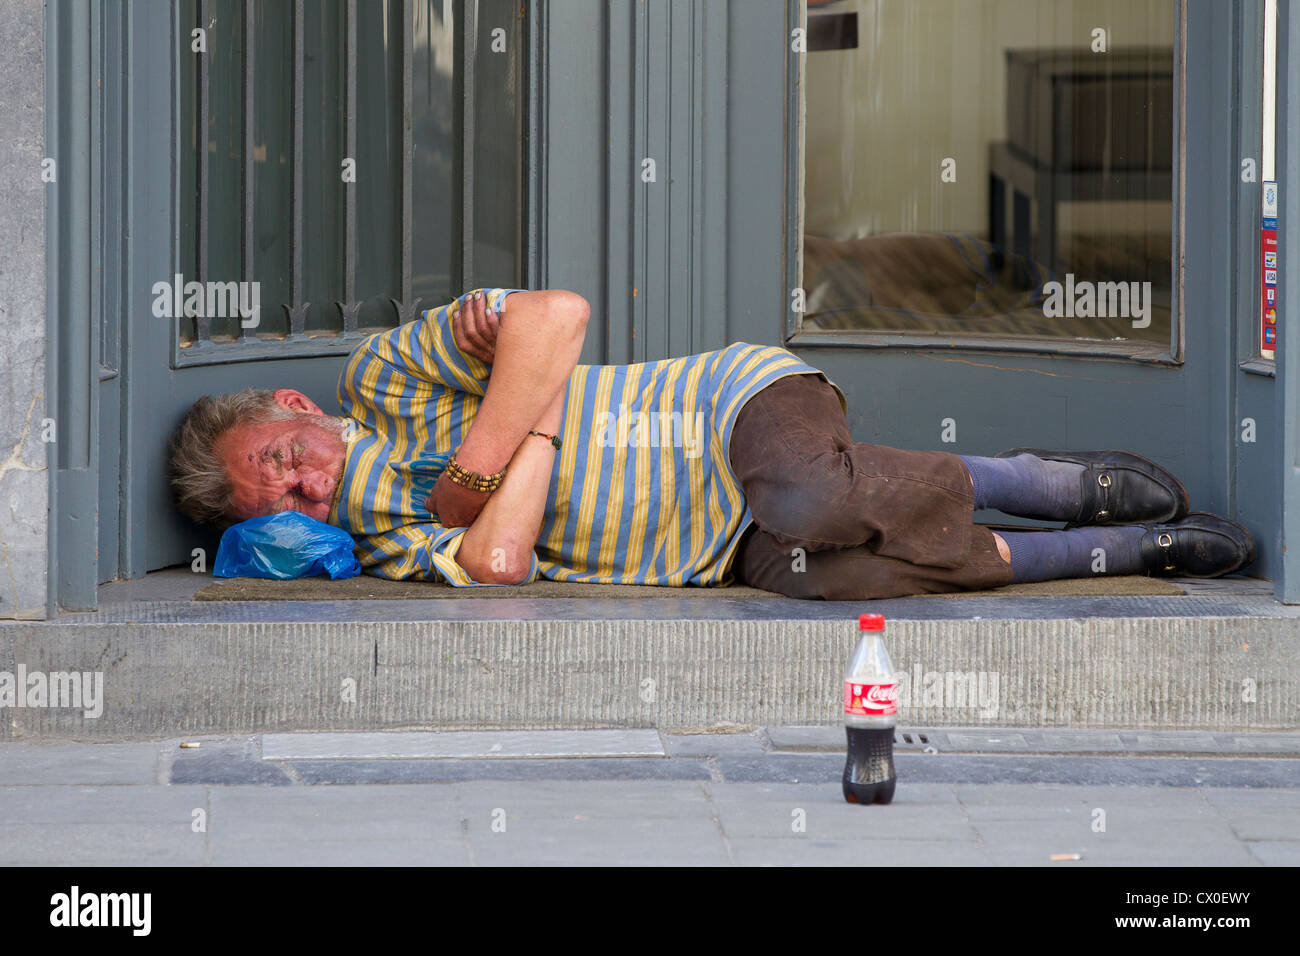 homeless man sleeping doorway Stock Photo